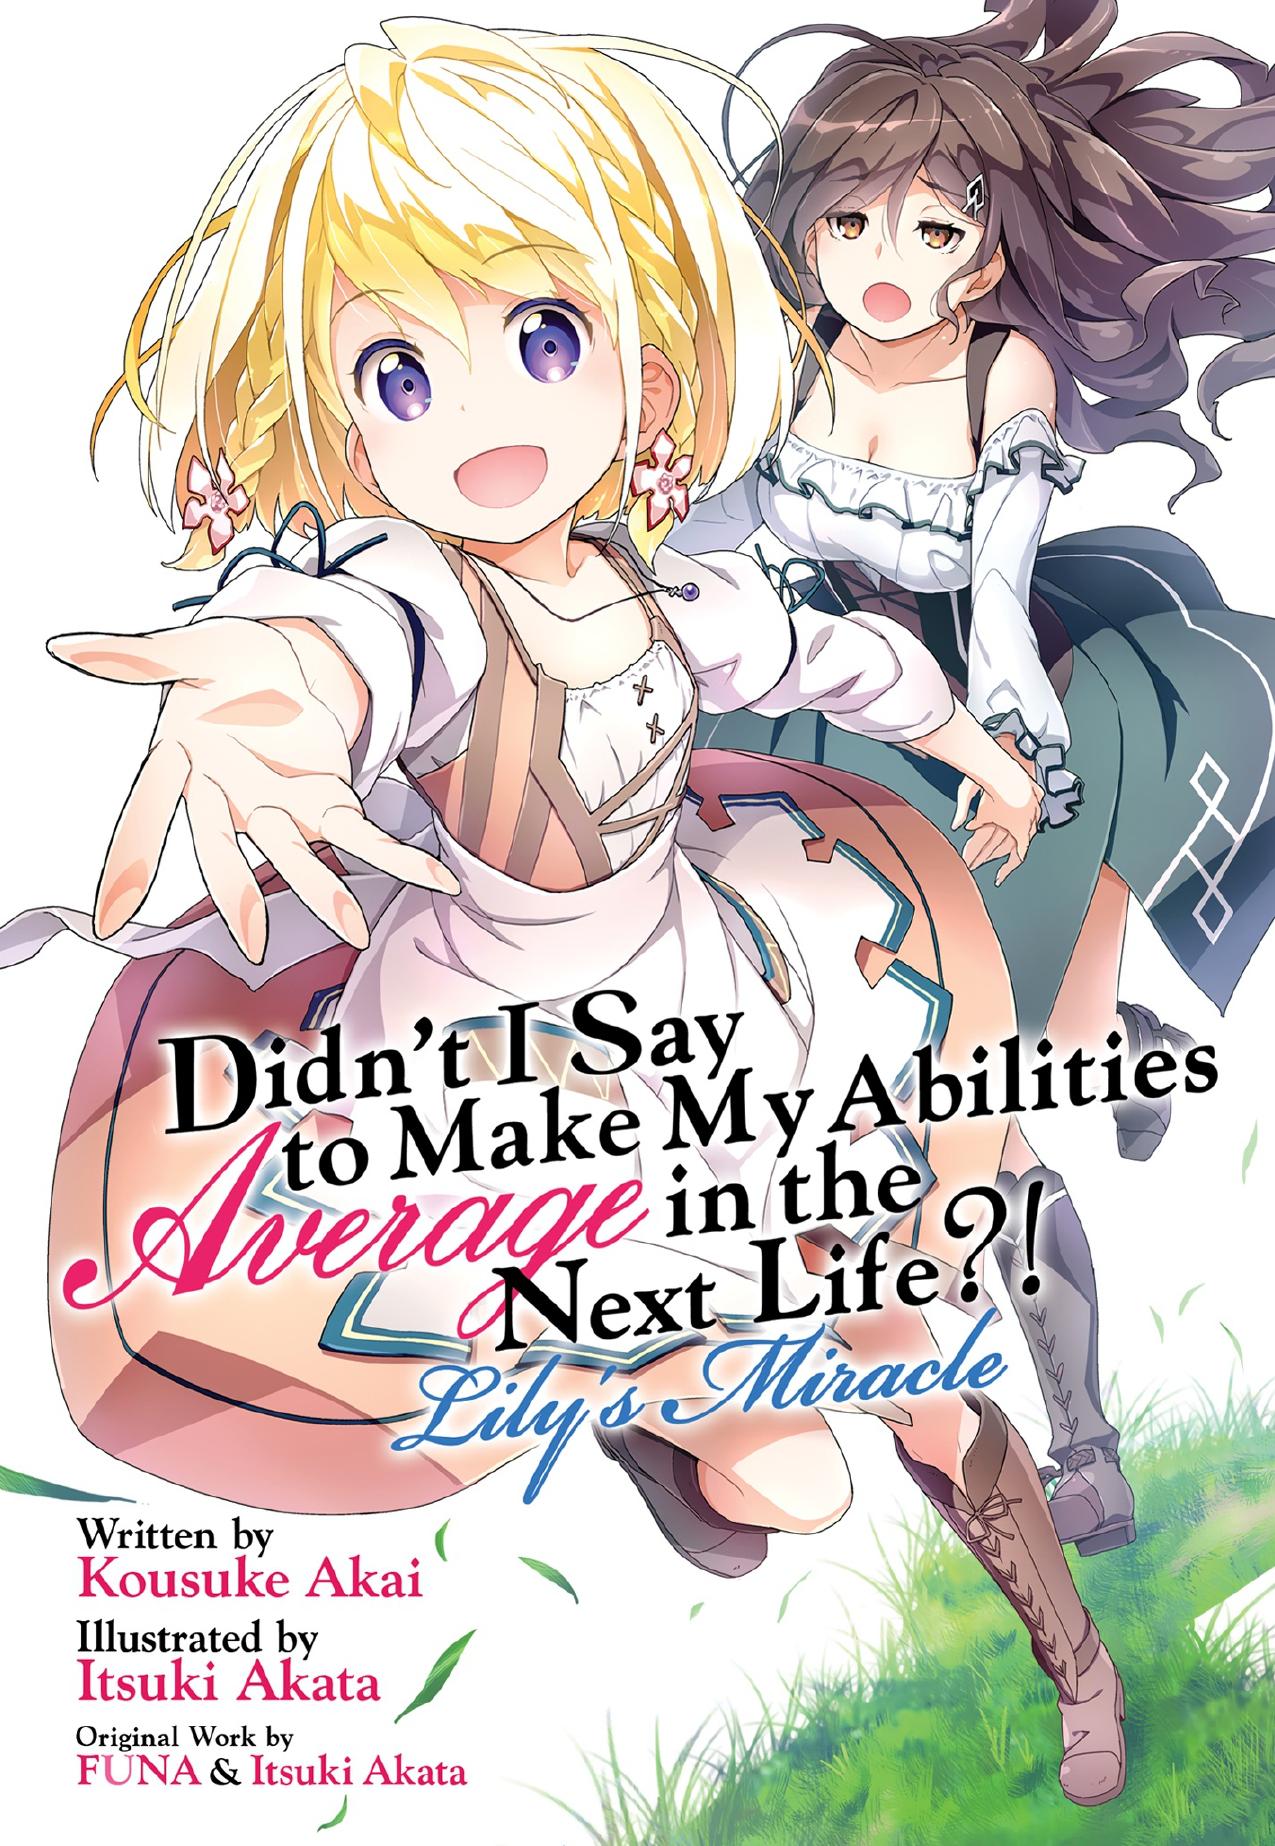 Didnât I Say to Make My Abilities Average in the Next Life?! Lilyâs Miracle by Kousuke Akai